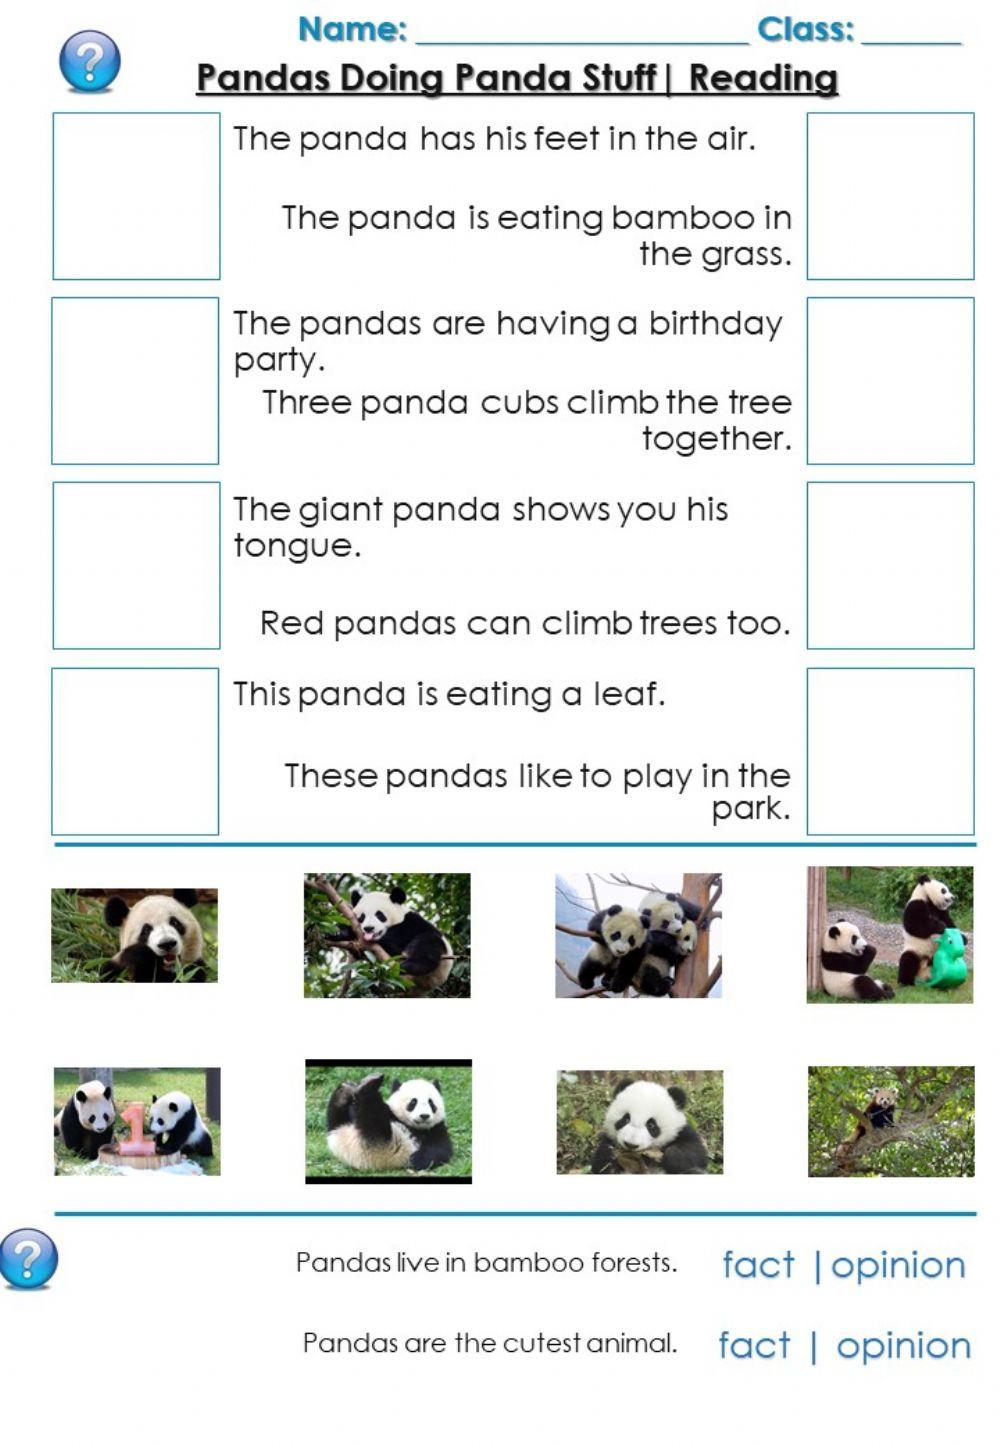 Pandas Doing Panda Stuff - Captions